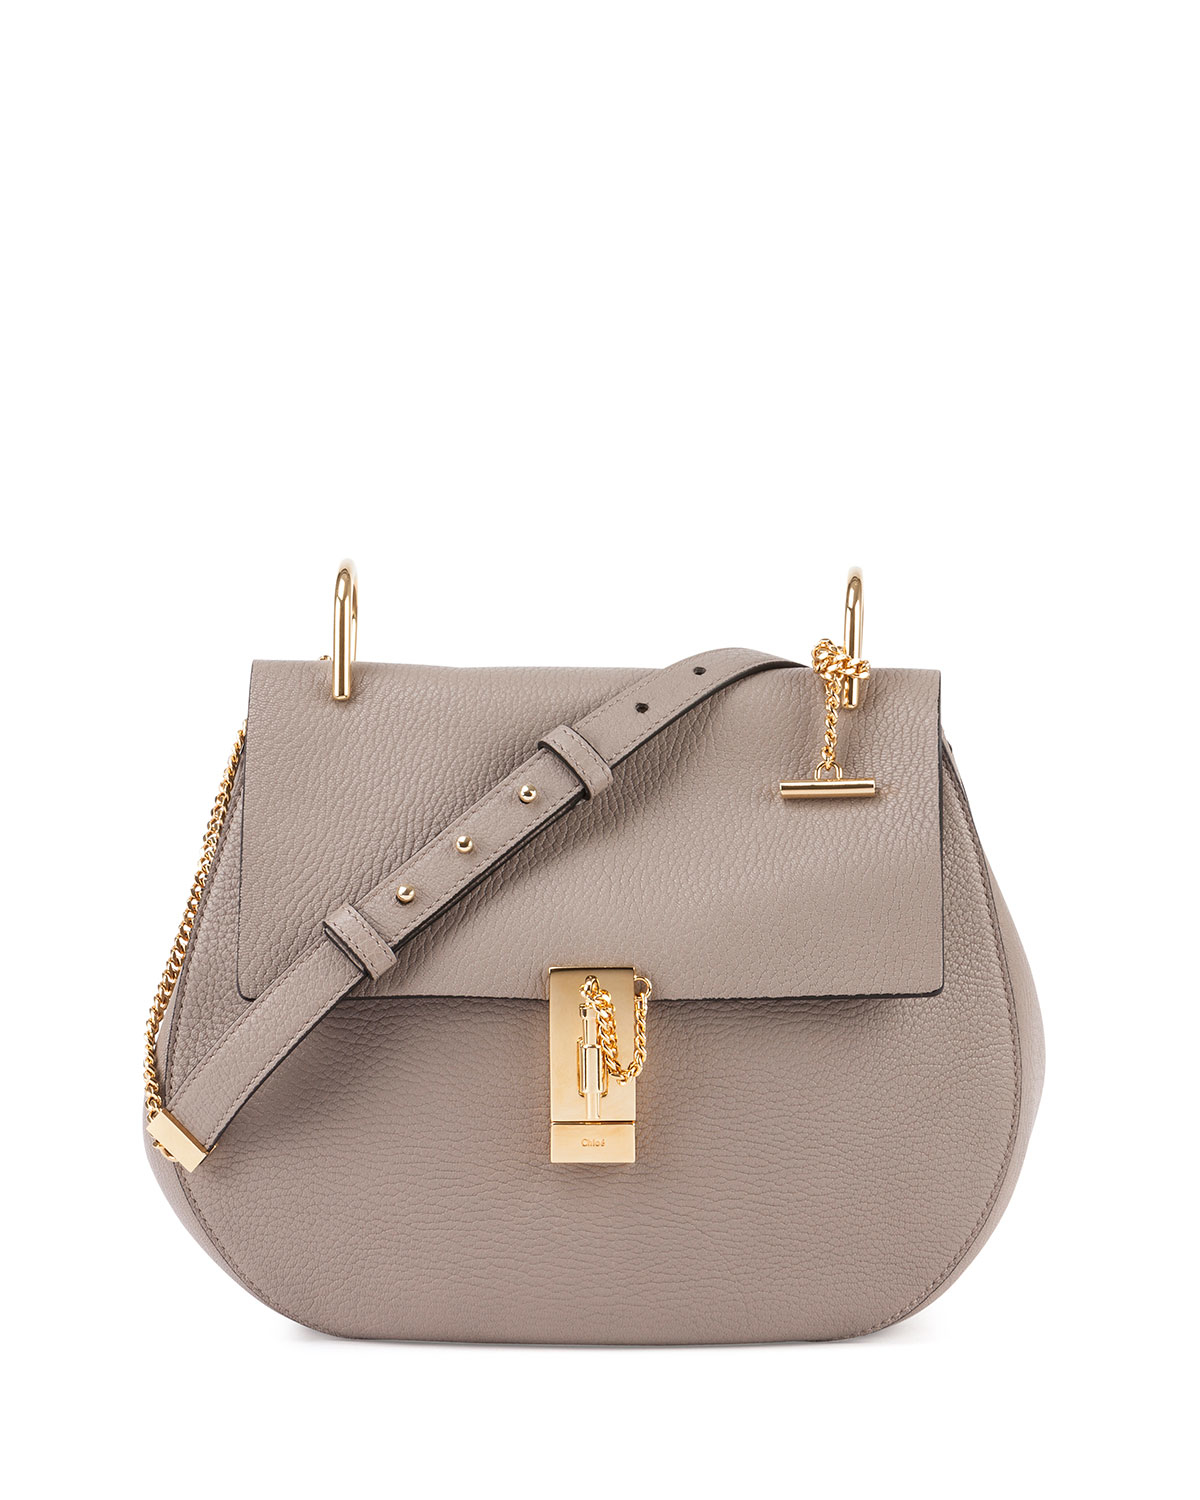 Chloé Drew Medium Leather Shoulder Bag in Gray | Lyst